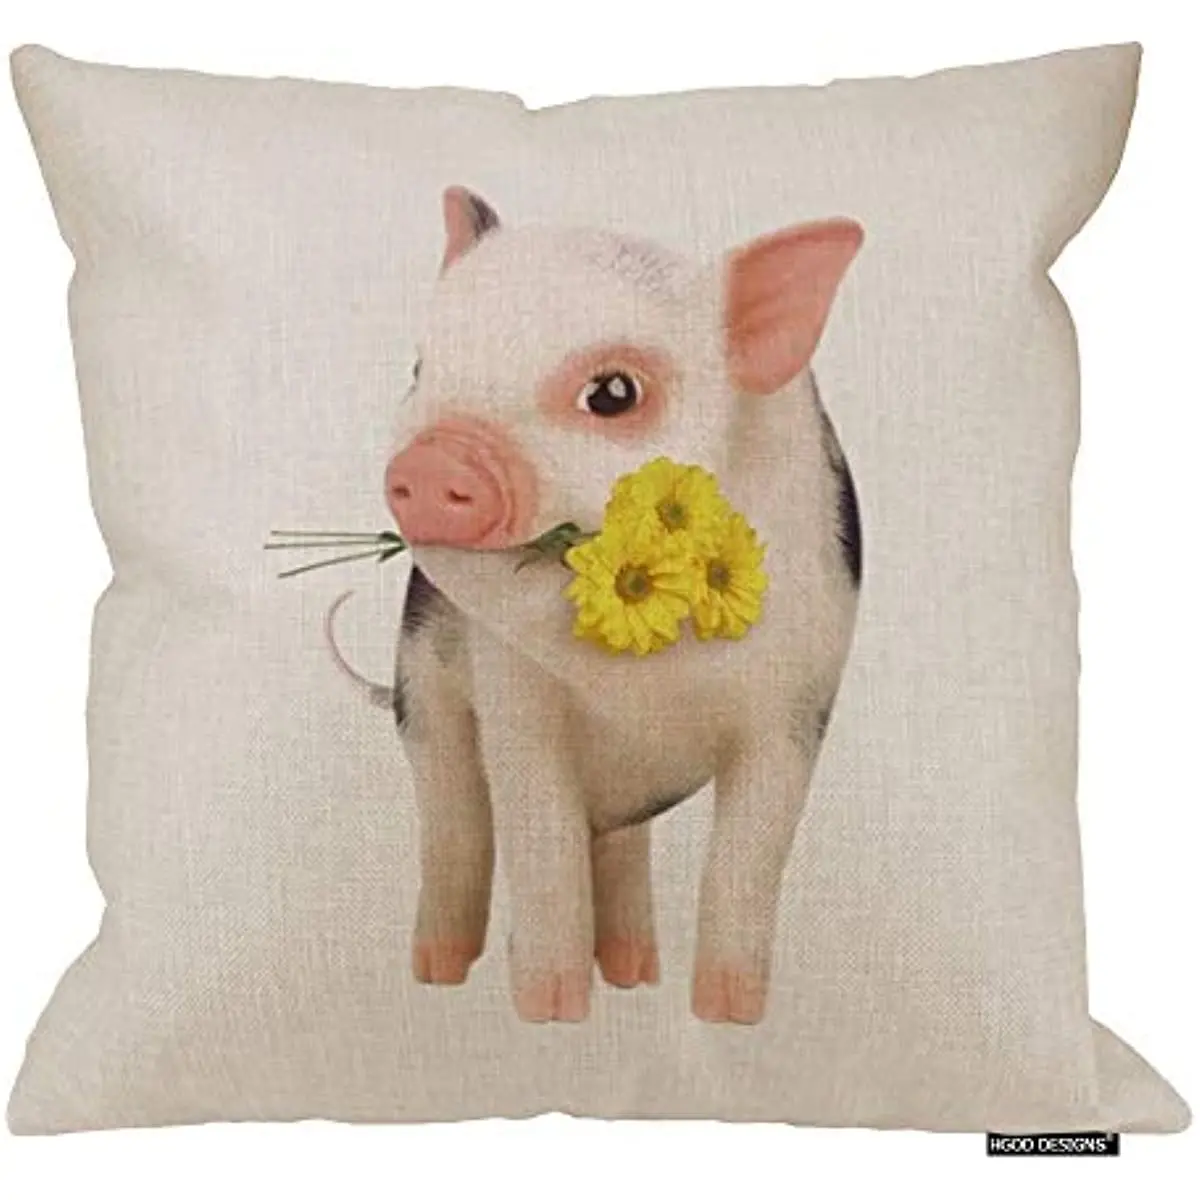 

Cute Pig Pillows Case Cartoon Cotton Linen Pillowcase for Bedroom Decorative Cushions for Elegant Sofa Pillow Covers Decorative